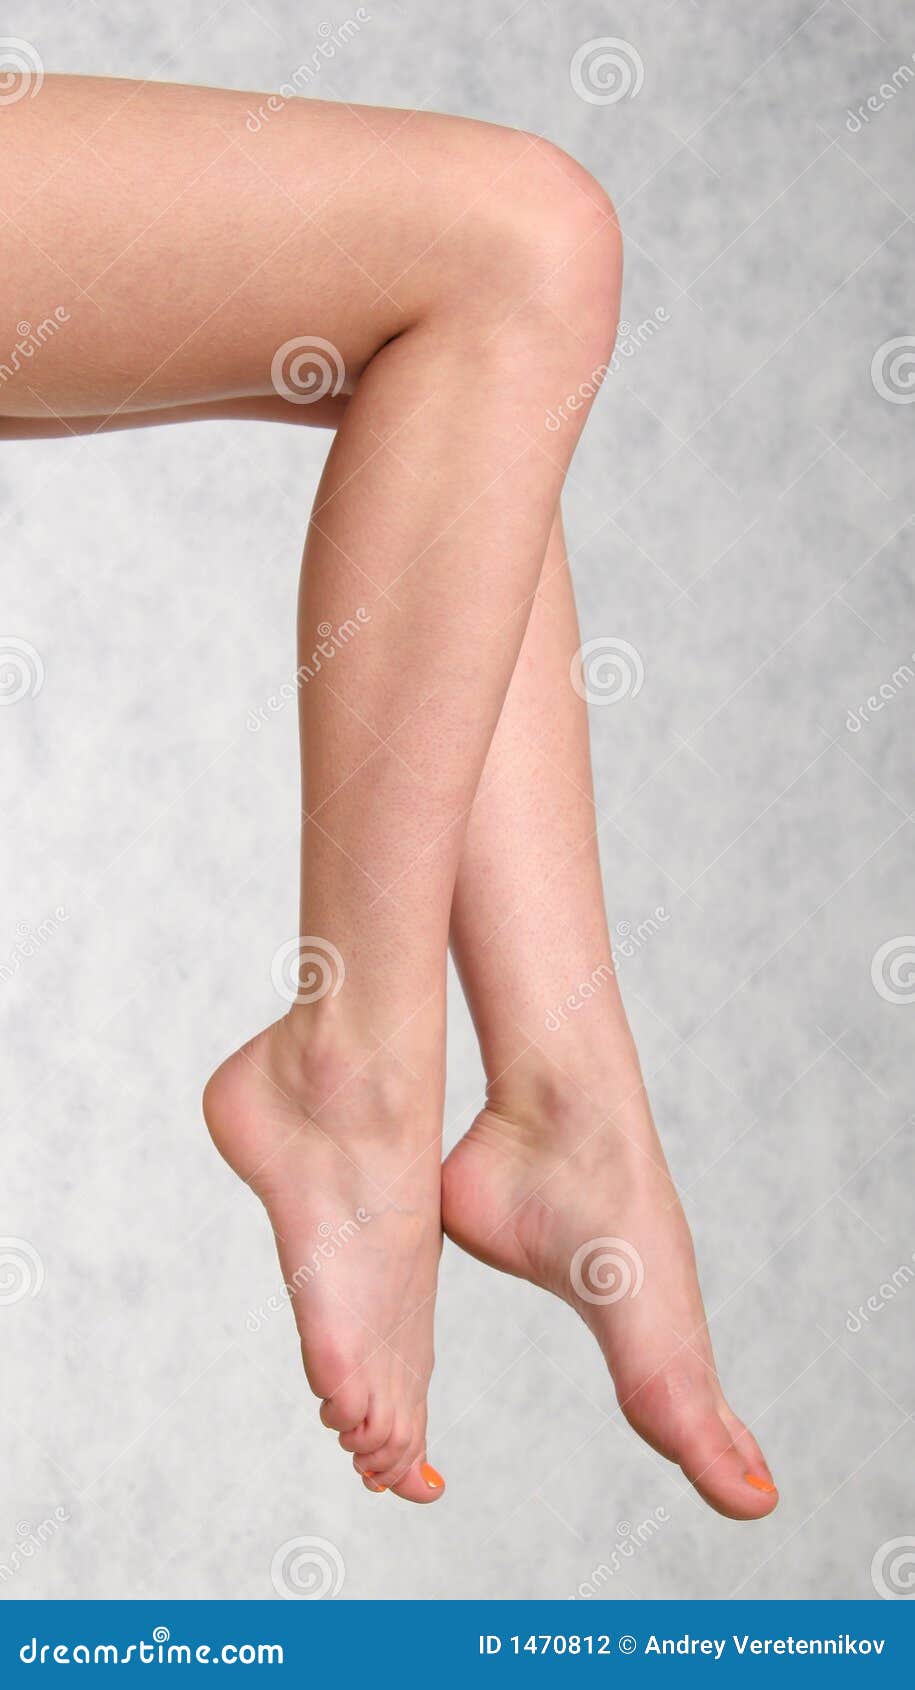 andra beck share leg images female photos